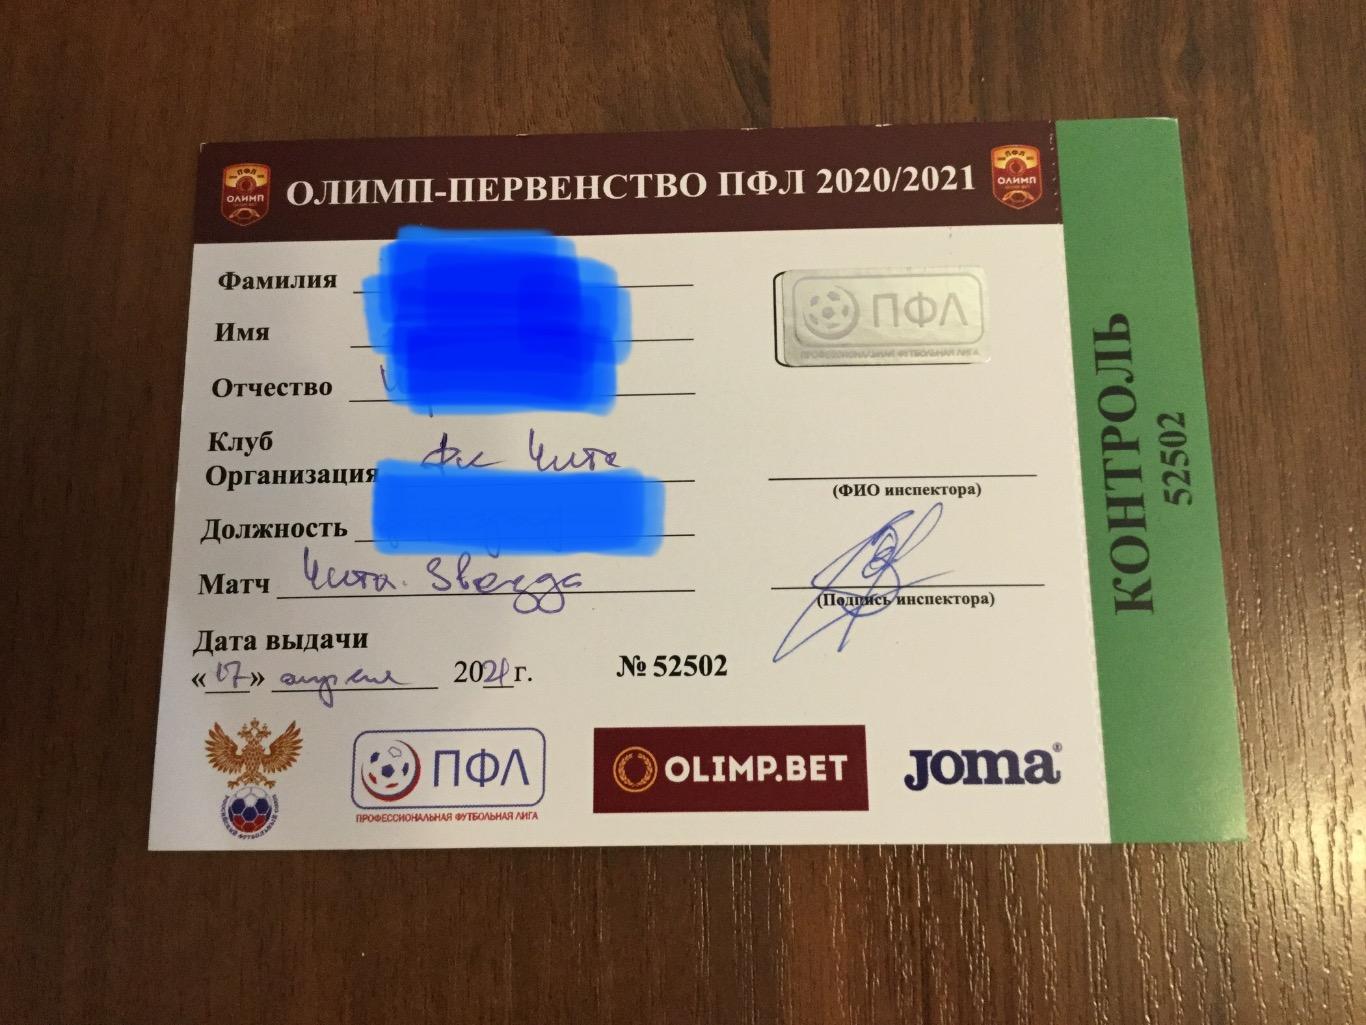 ФК Чита - Звезда (С-Петербург) - 2020/2021 (17 апреля) аккредитация с контролем